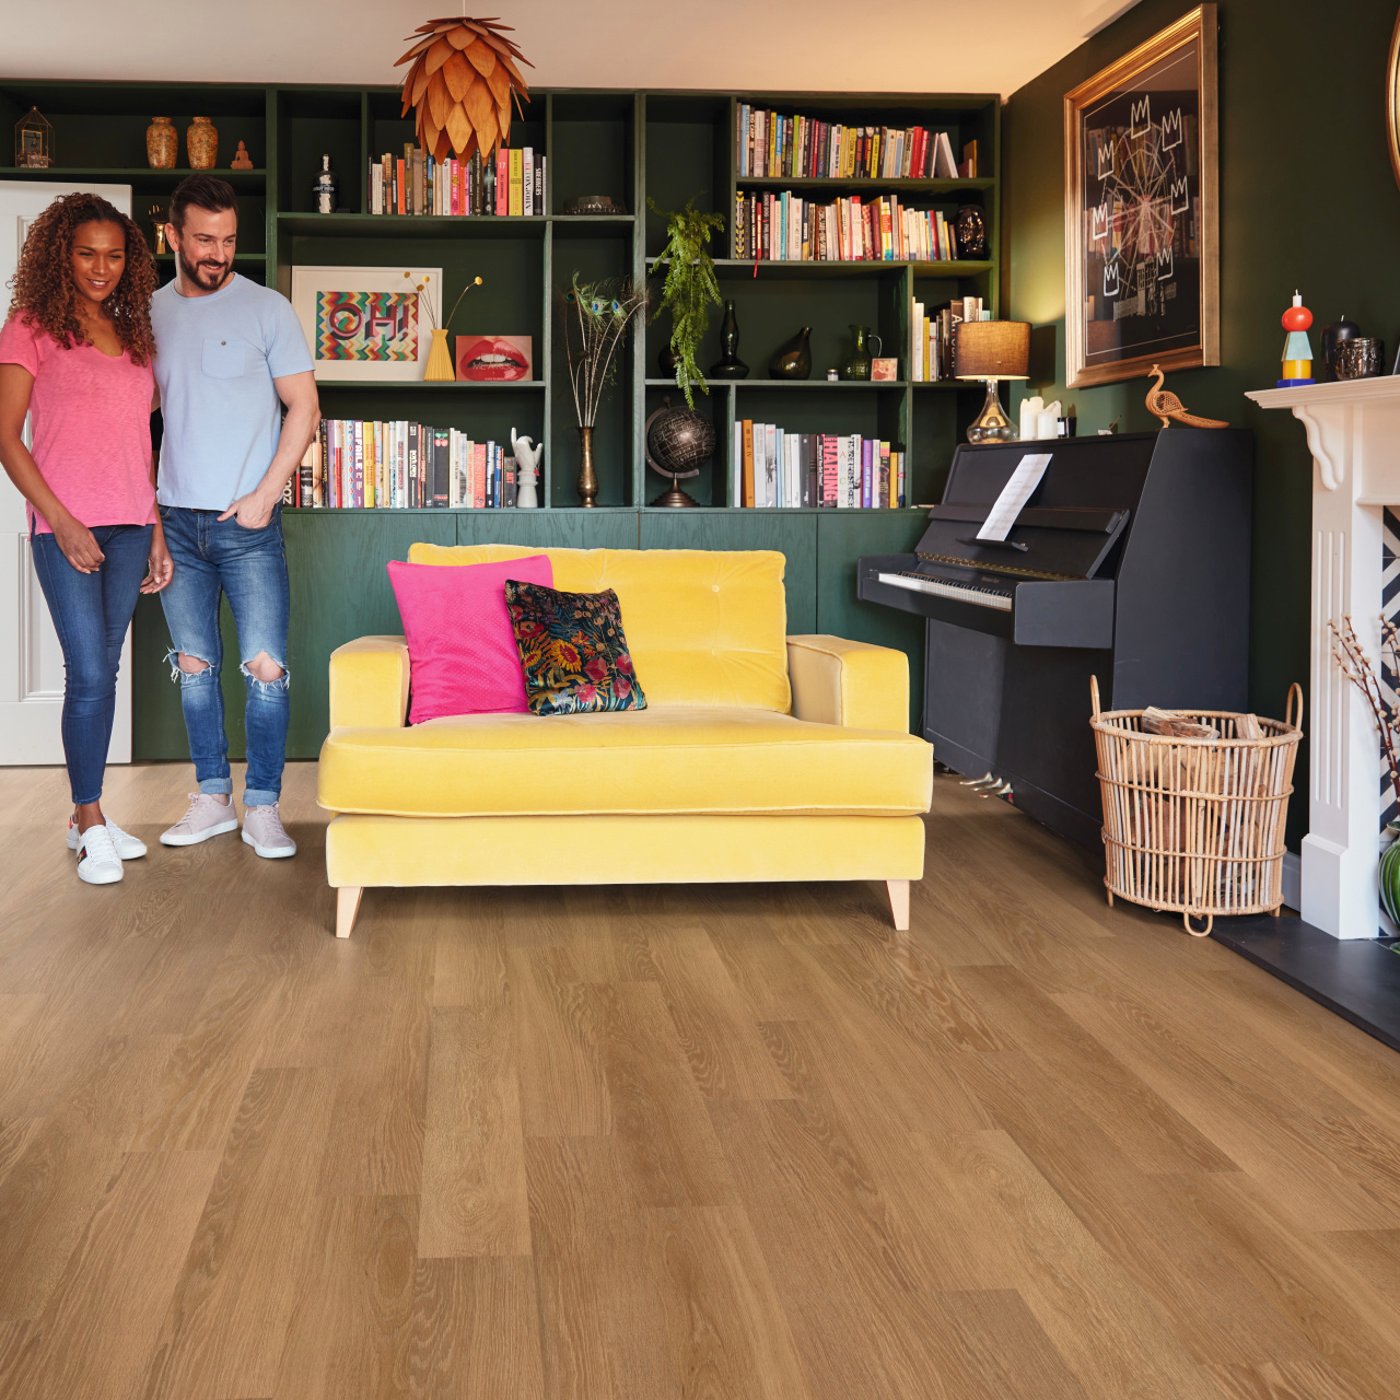 Karndean honey limed oak wood flooring in a living room